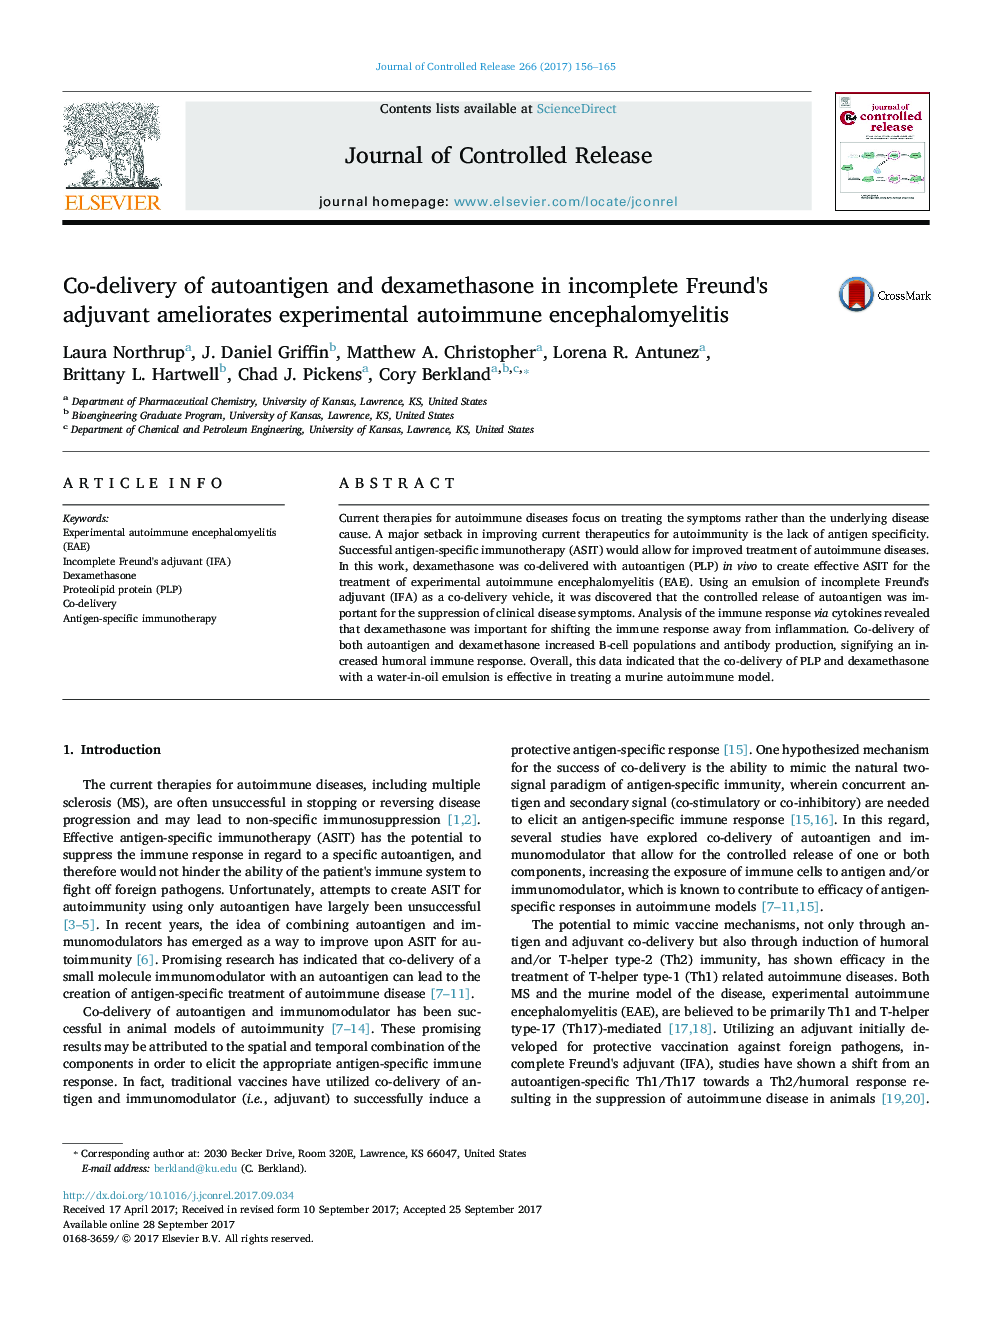 Co-delivery of autoantigen and dexamethasone in incomplete Freund's adjuvant ameliorates experimental autoimmune encephalomyelitis